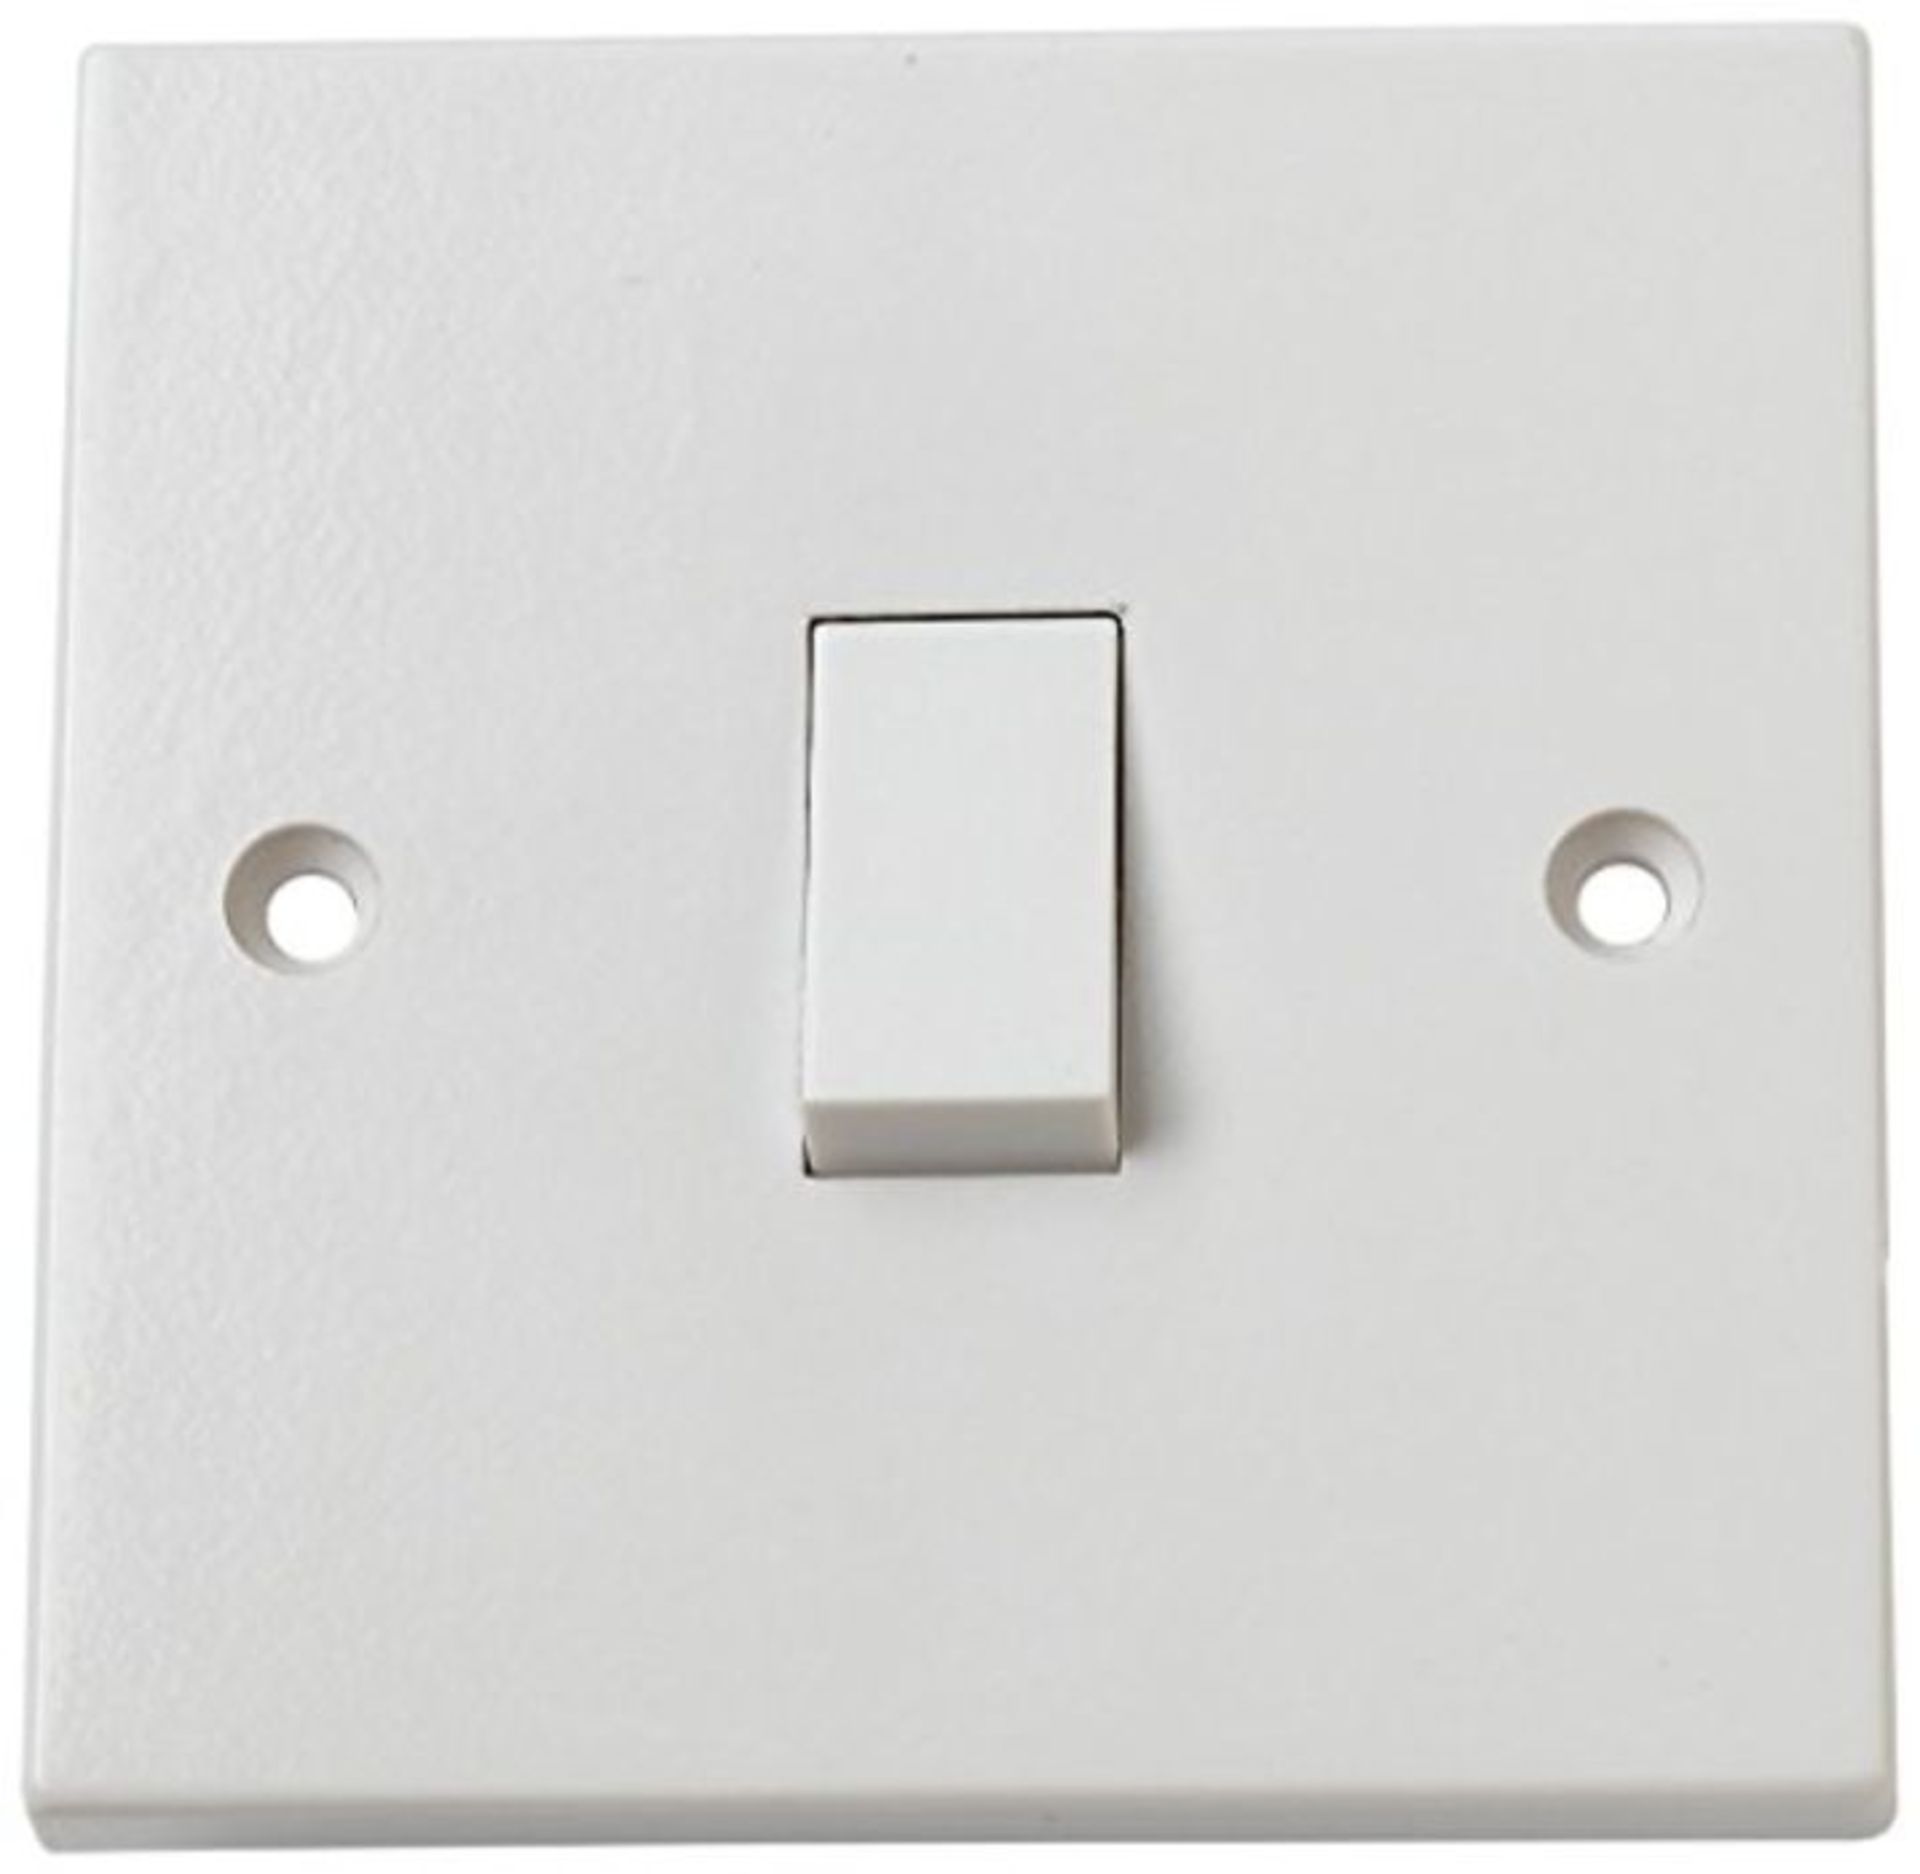 Merriway BH02606 Rocker 10amp Single Electric Wall Switch 1-Gang 1-Way - White